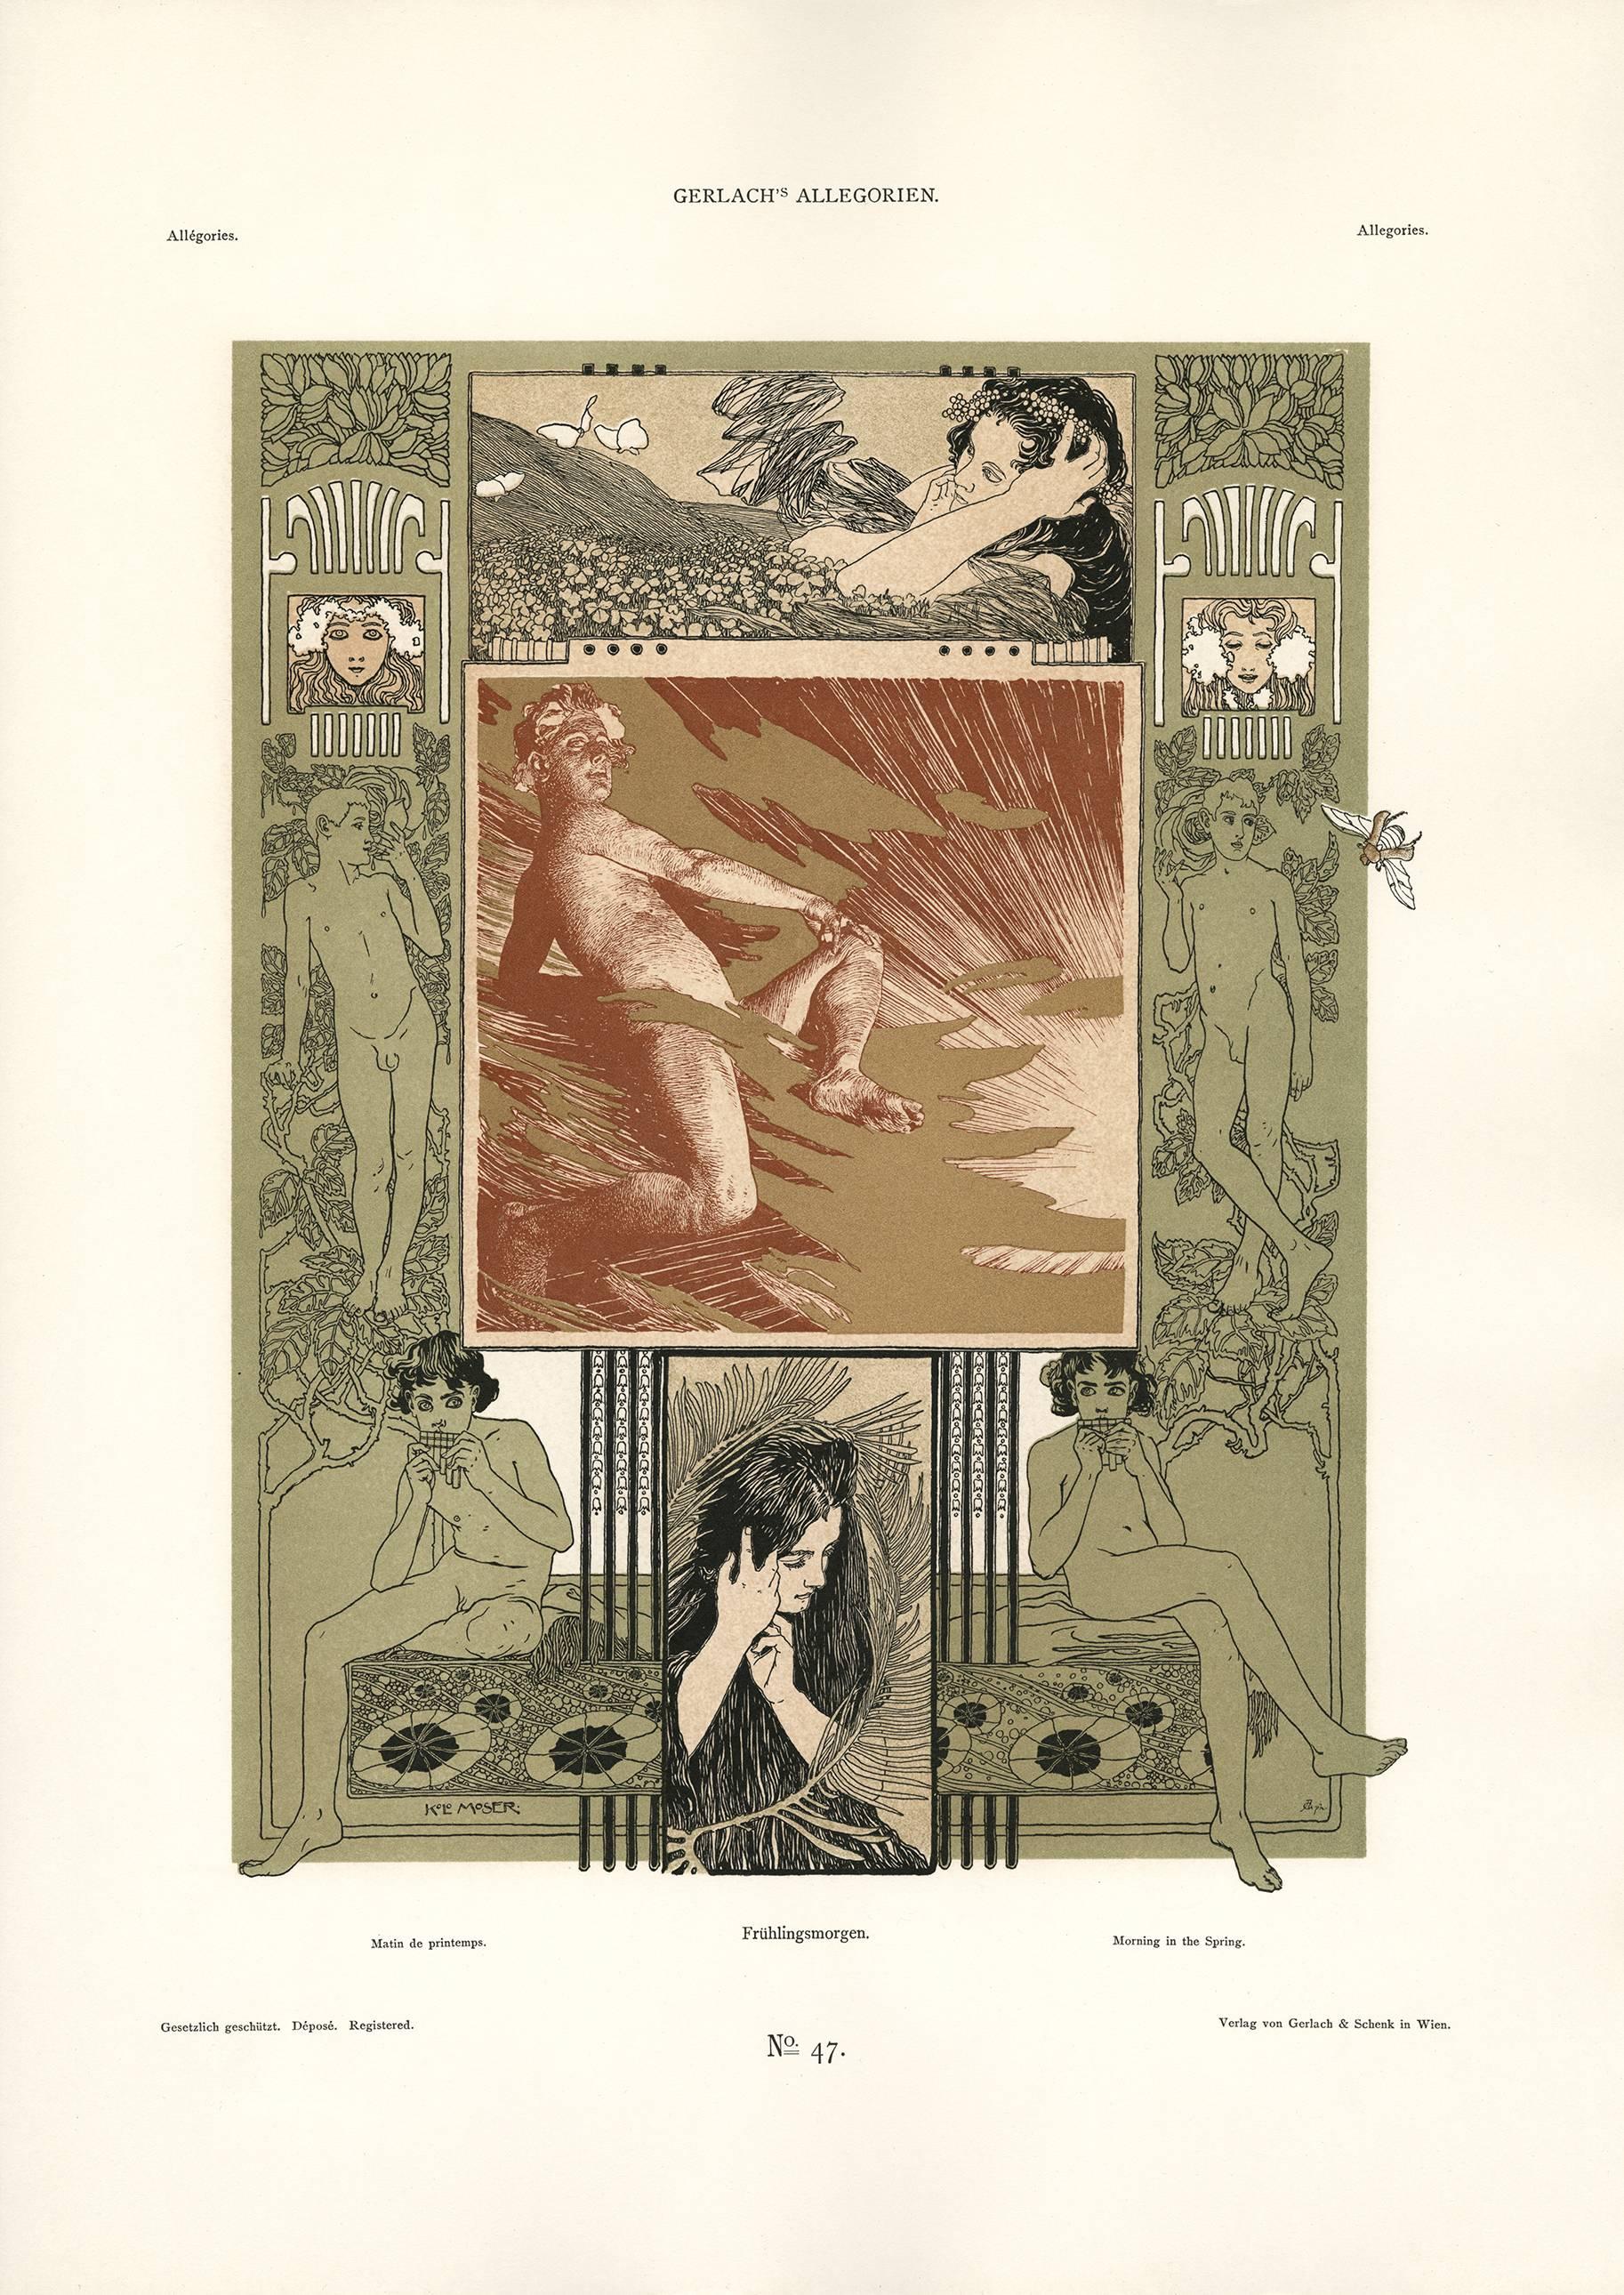 Figurative Print Koloman Moser - Assiette Allegorien n°47 : « Morning in the Spring », lithographie de Gerlach